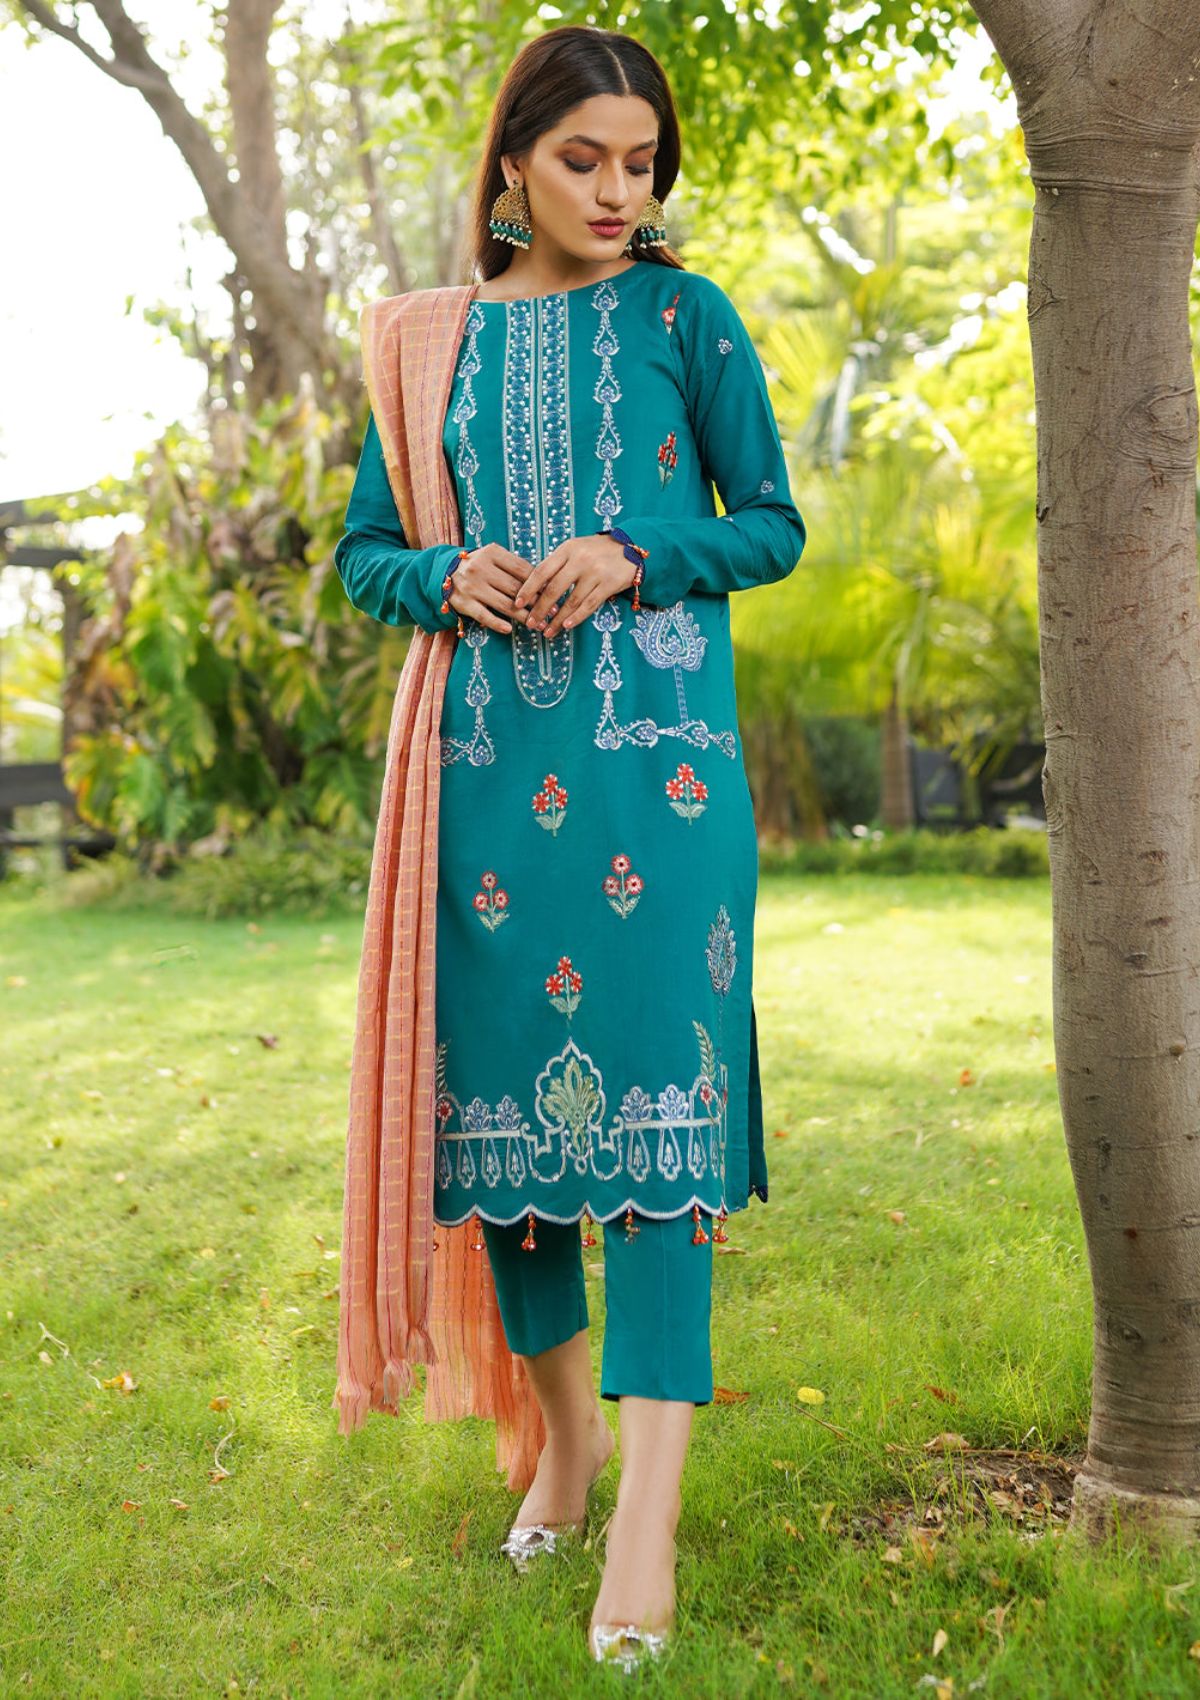 Bin Ilyas Maya Lawn Vol-02'23 D-2032 A is available at Mohsin Saeed Fabrics online shop All the top women brands in pakistan such as Freesia, Maria b, Zara Shahjahan, Asim Jofa, Zaha, Elan, Crimson, Sobia Nazir, Maryam n Maria, Hussain Rehar, Marjjan, Anaya by Kiran Chaudhary, johra, Shaista, farah talib aziz and Gul Ahmed. 